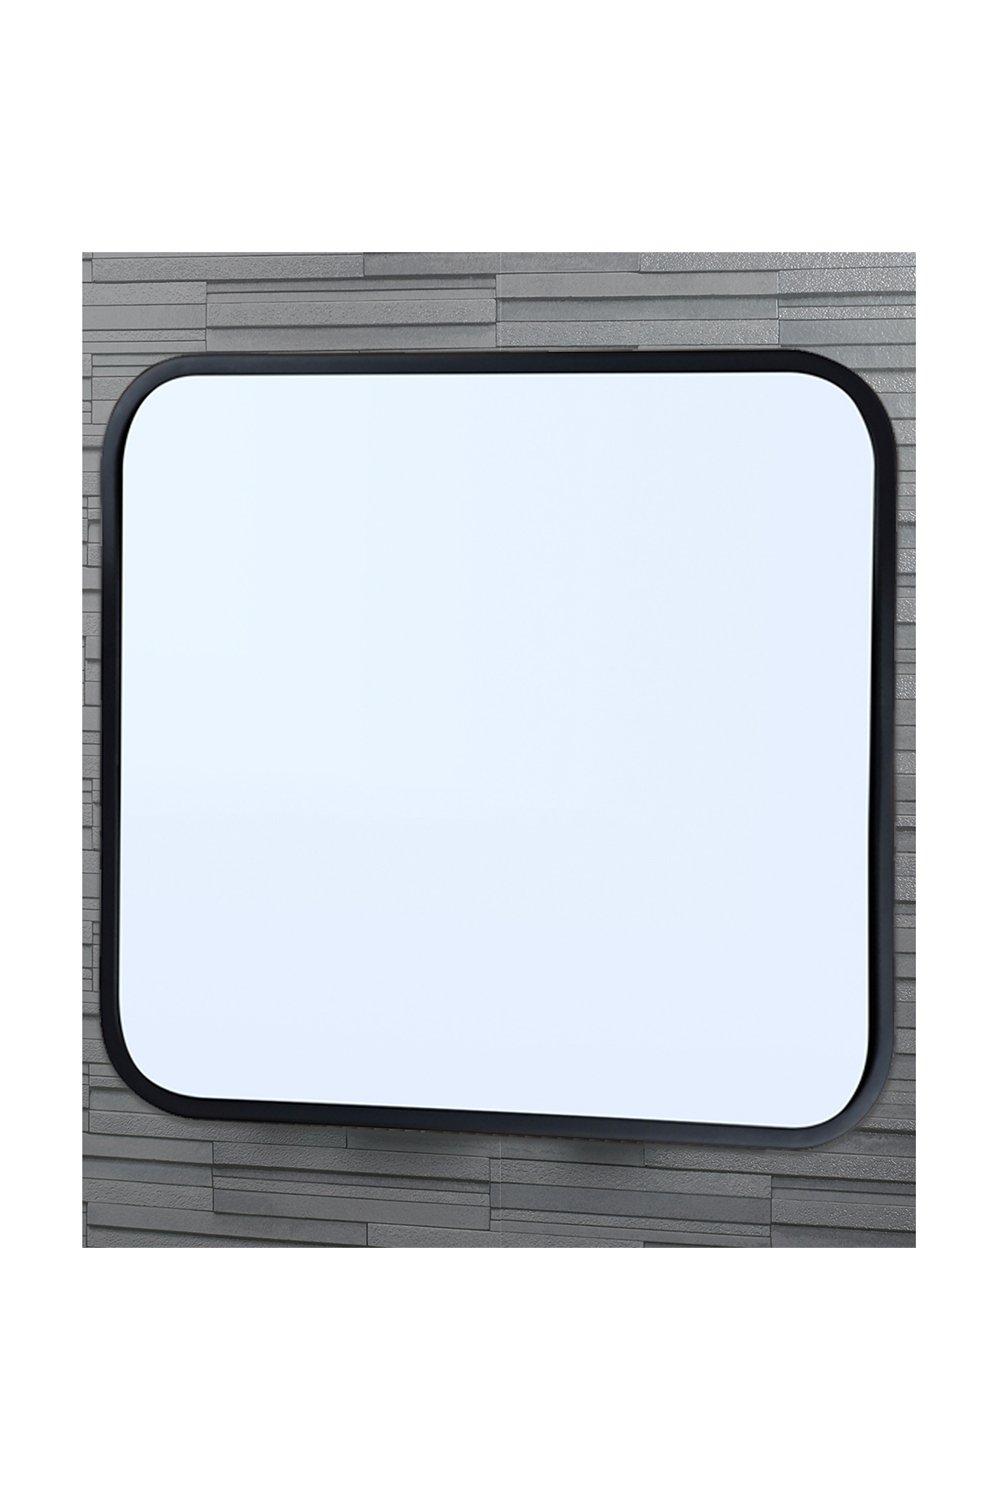 'Shoreditch' Square Black Metal Framed Mirror 40cmx40cm